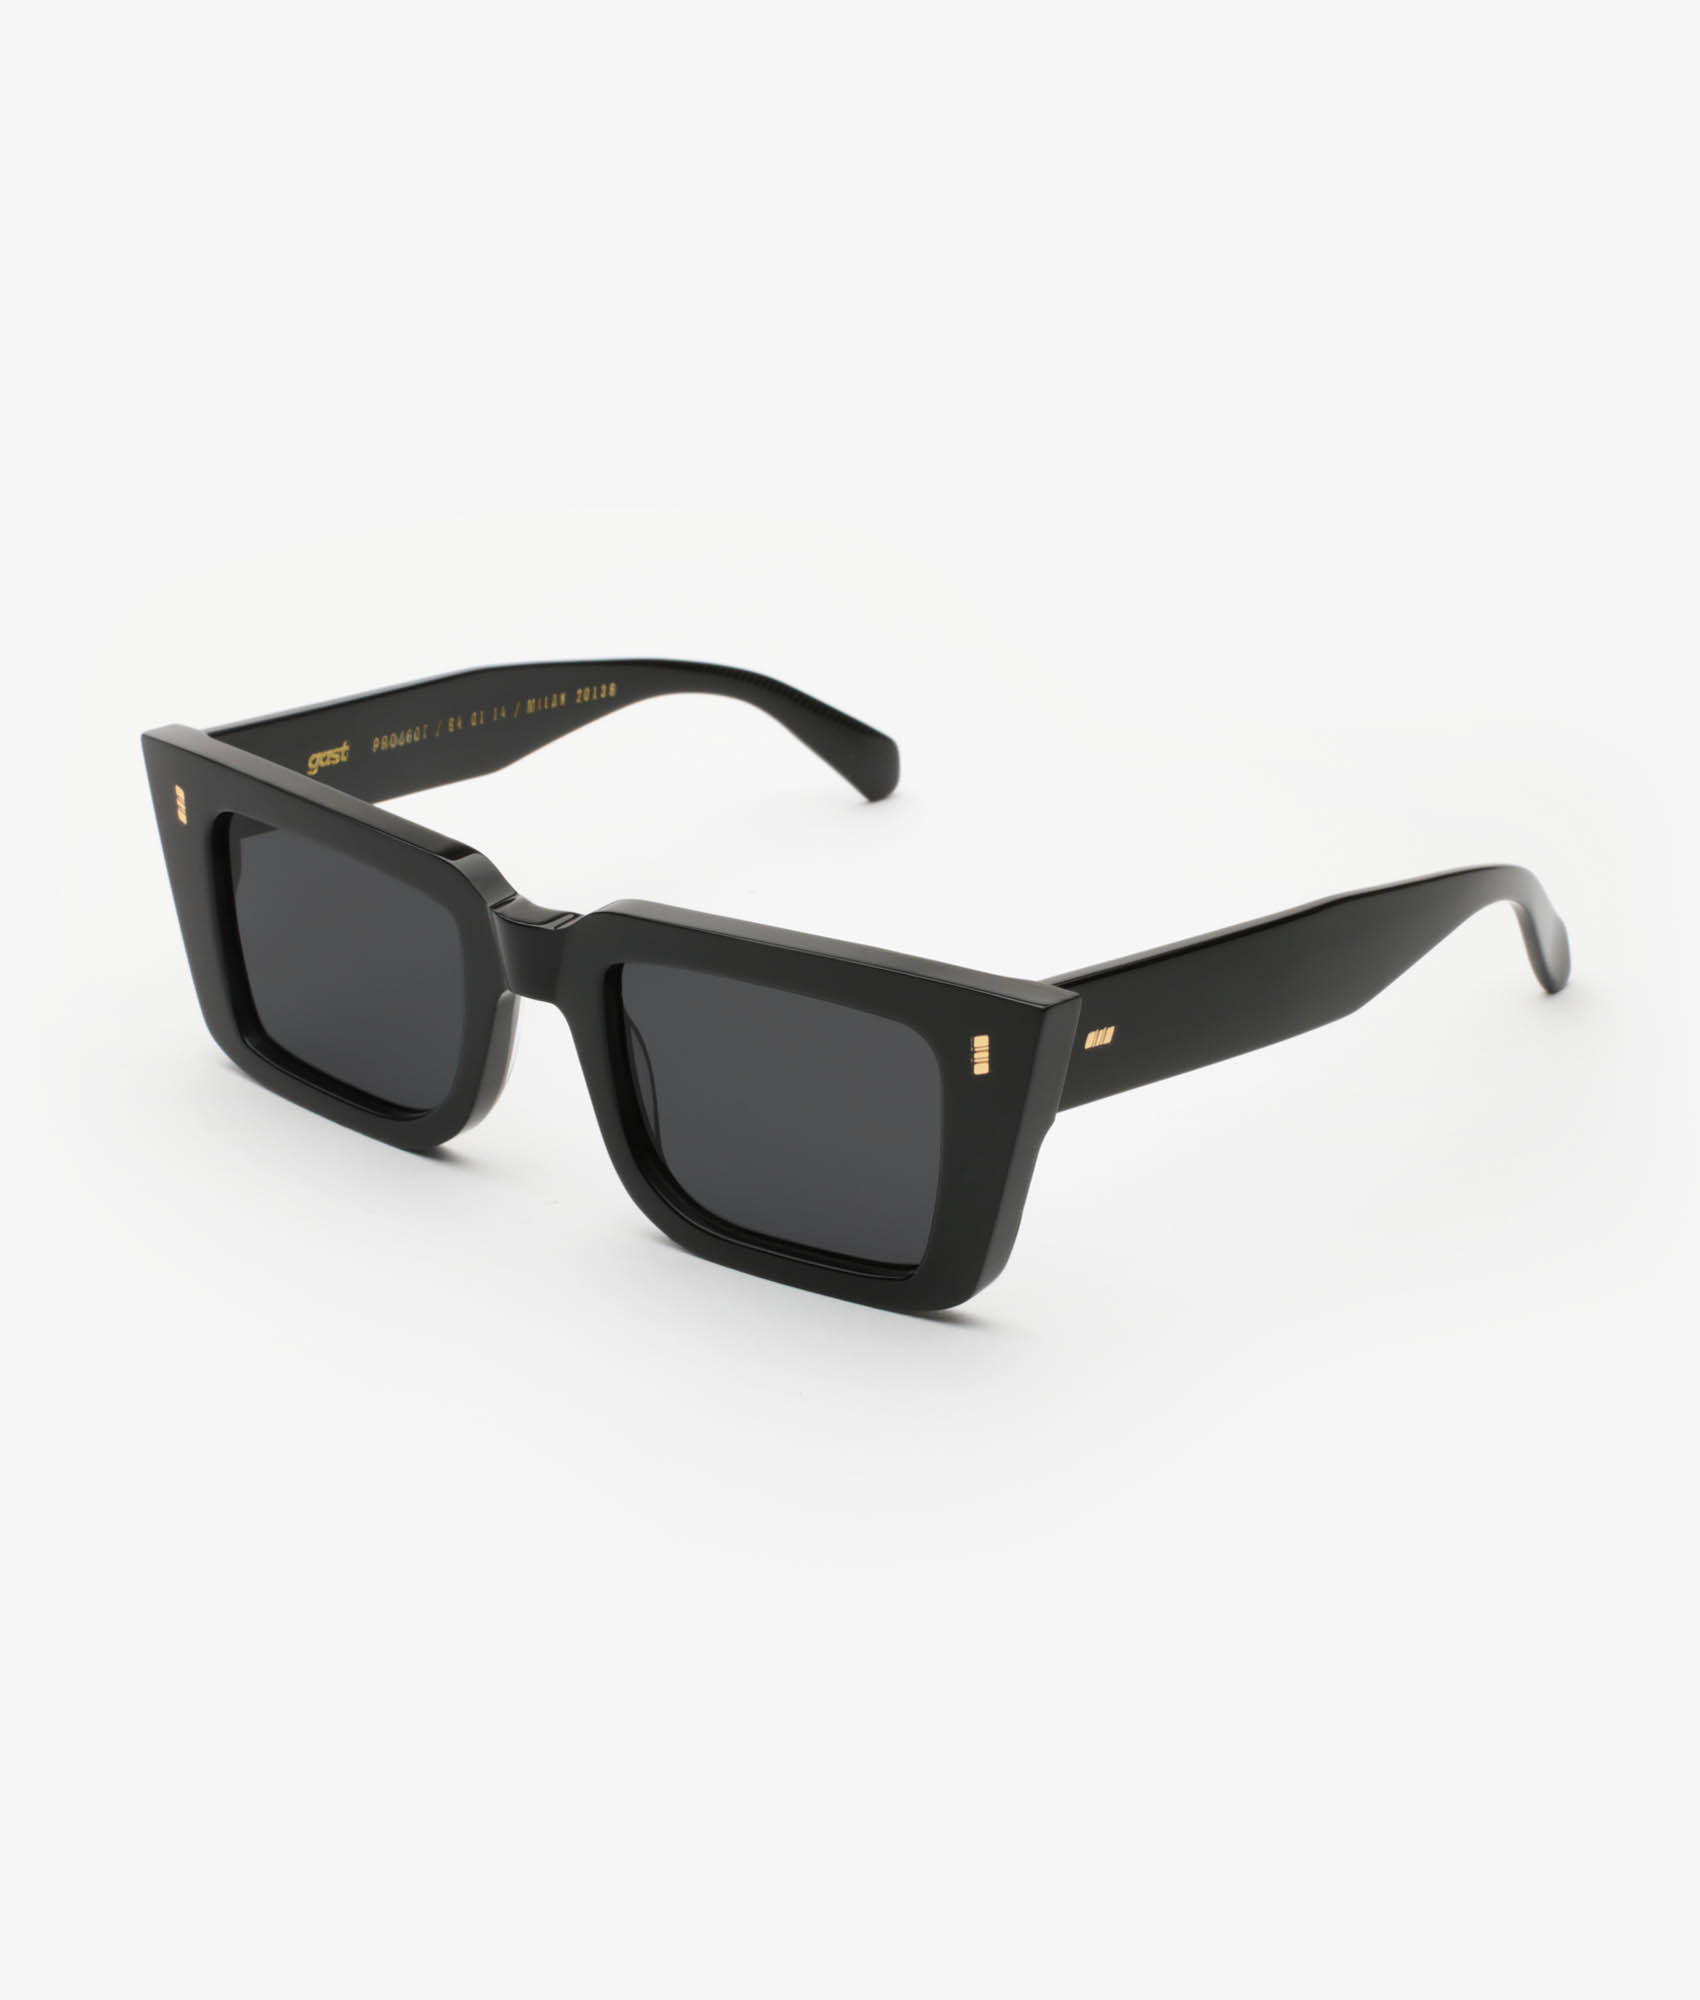 Fable Black Gast Sunglasses